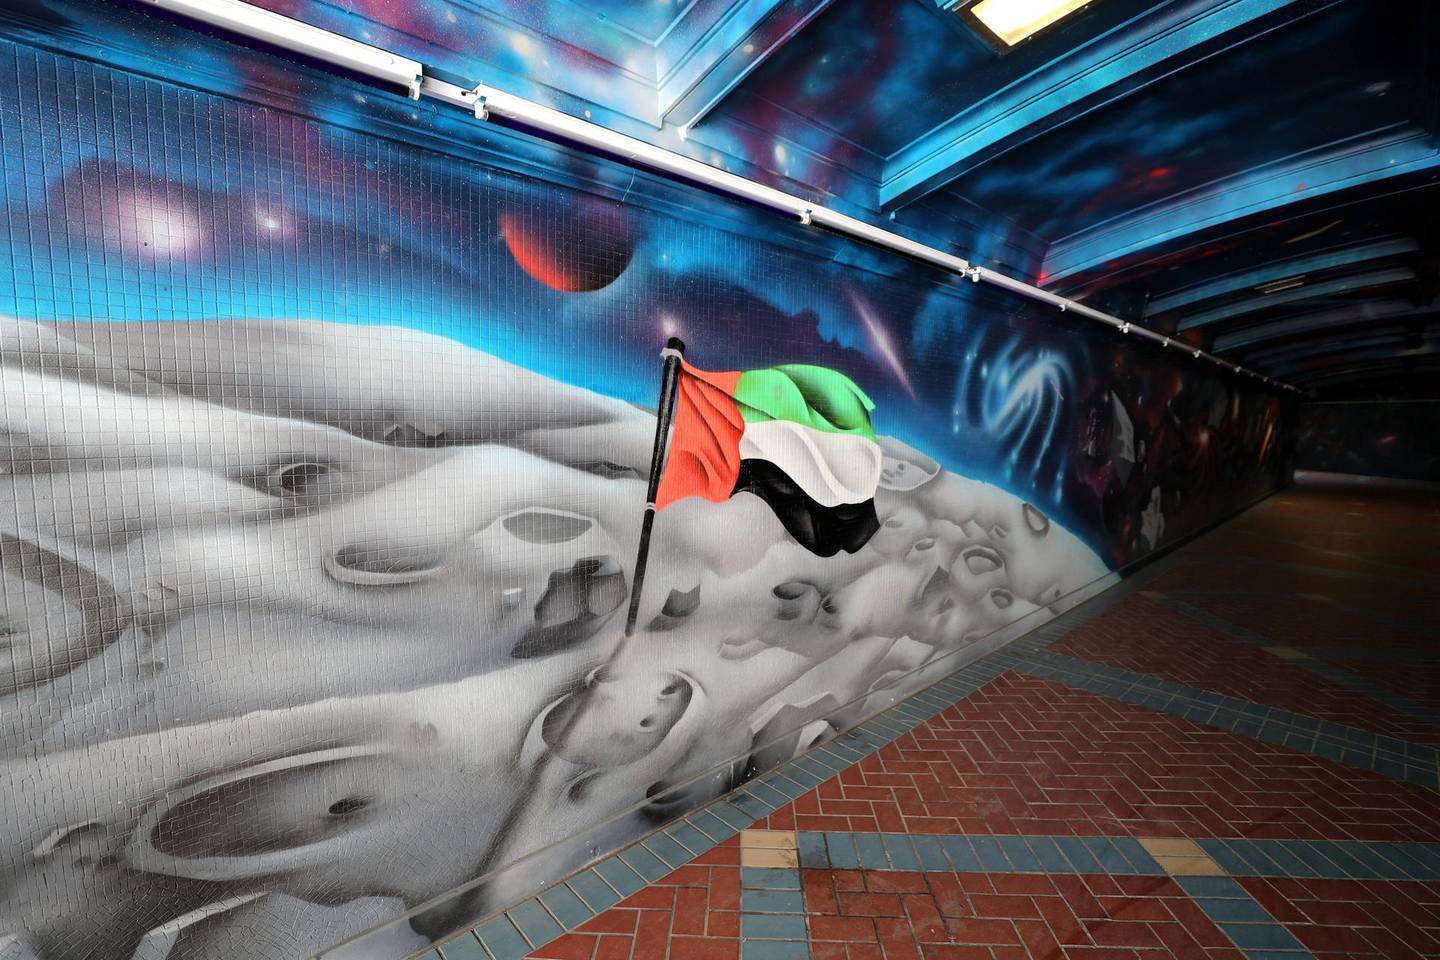 Abu Dhabi, United Arab Emirates - Reporter: N/A: Photo project. Street art and graffiti from around the UAE. Monday, January 27th, 2020. Corniche, Abu Dhabi. Chris Whiteoak / The National